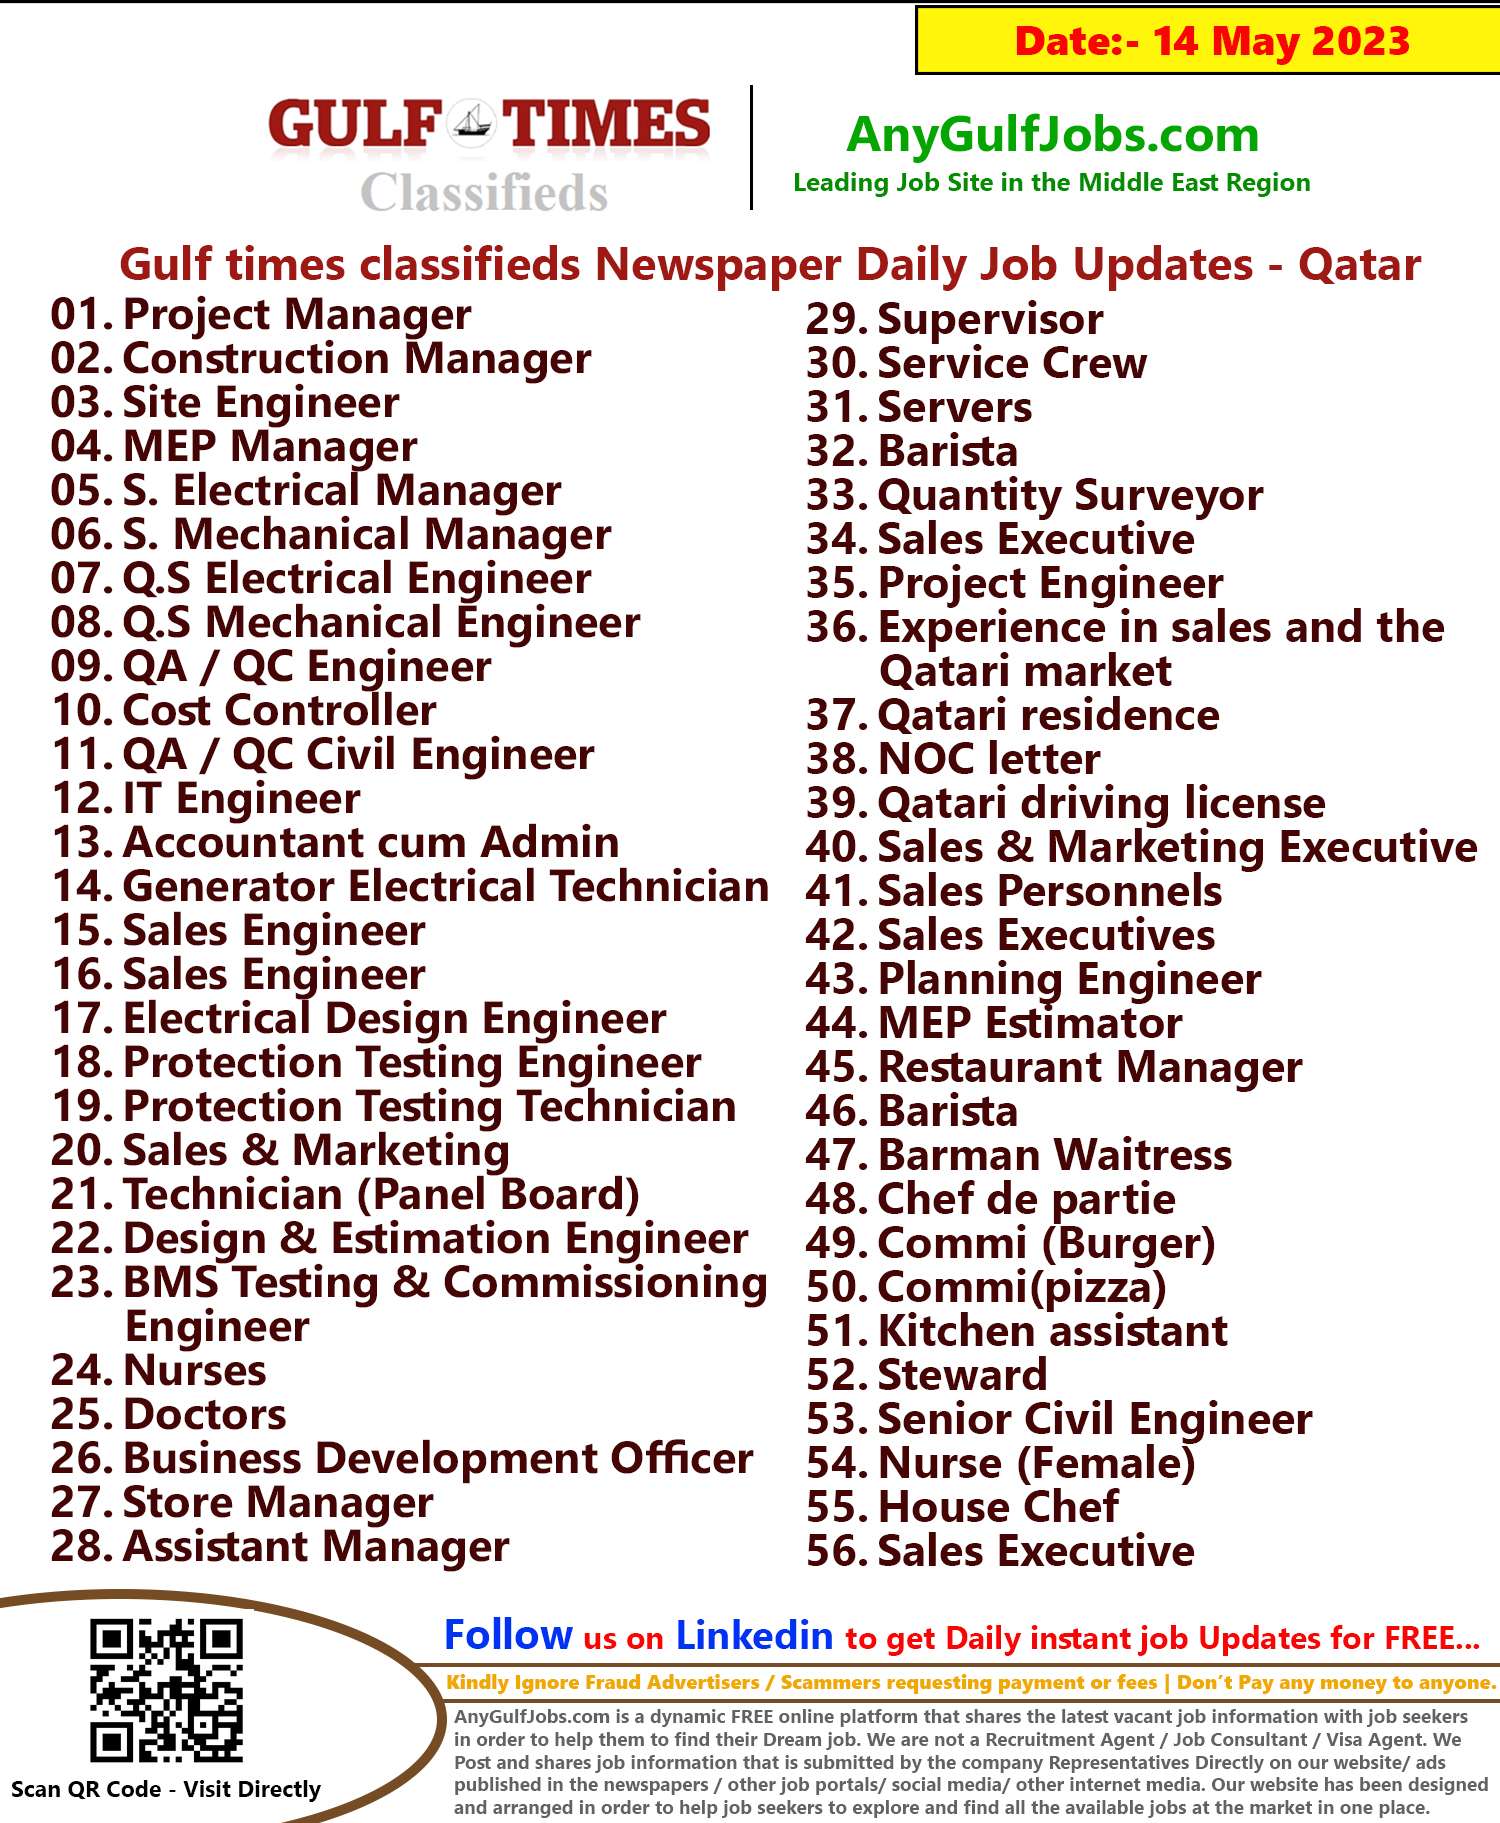 Gulf times classifieds Job Vacancies Qatar - 14 May 2023